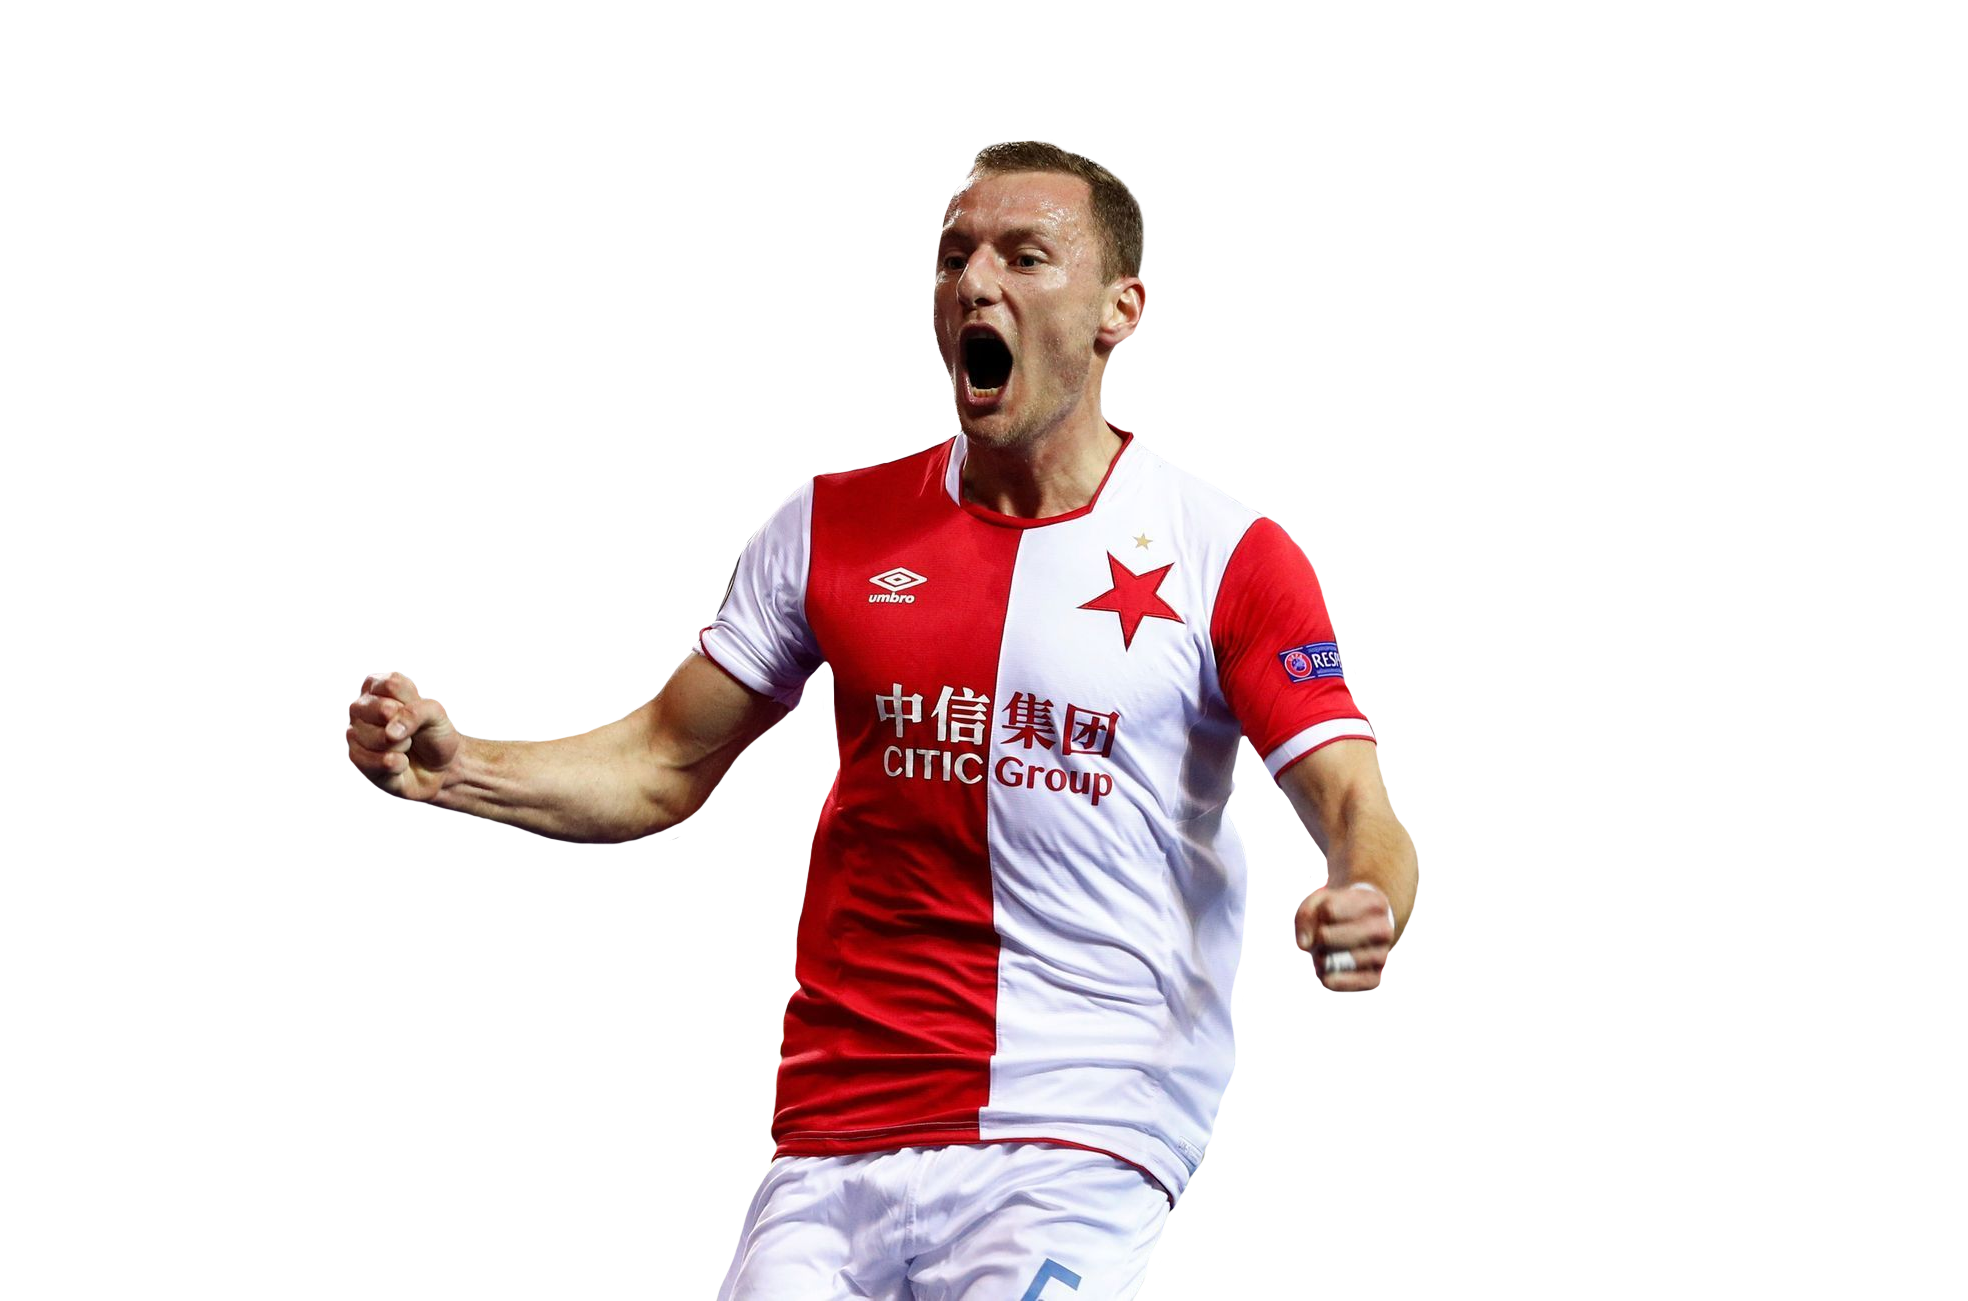 File:SK Slavia Praha vítěz ASC 2016.jpg - Wikimedia Commons